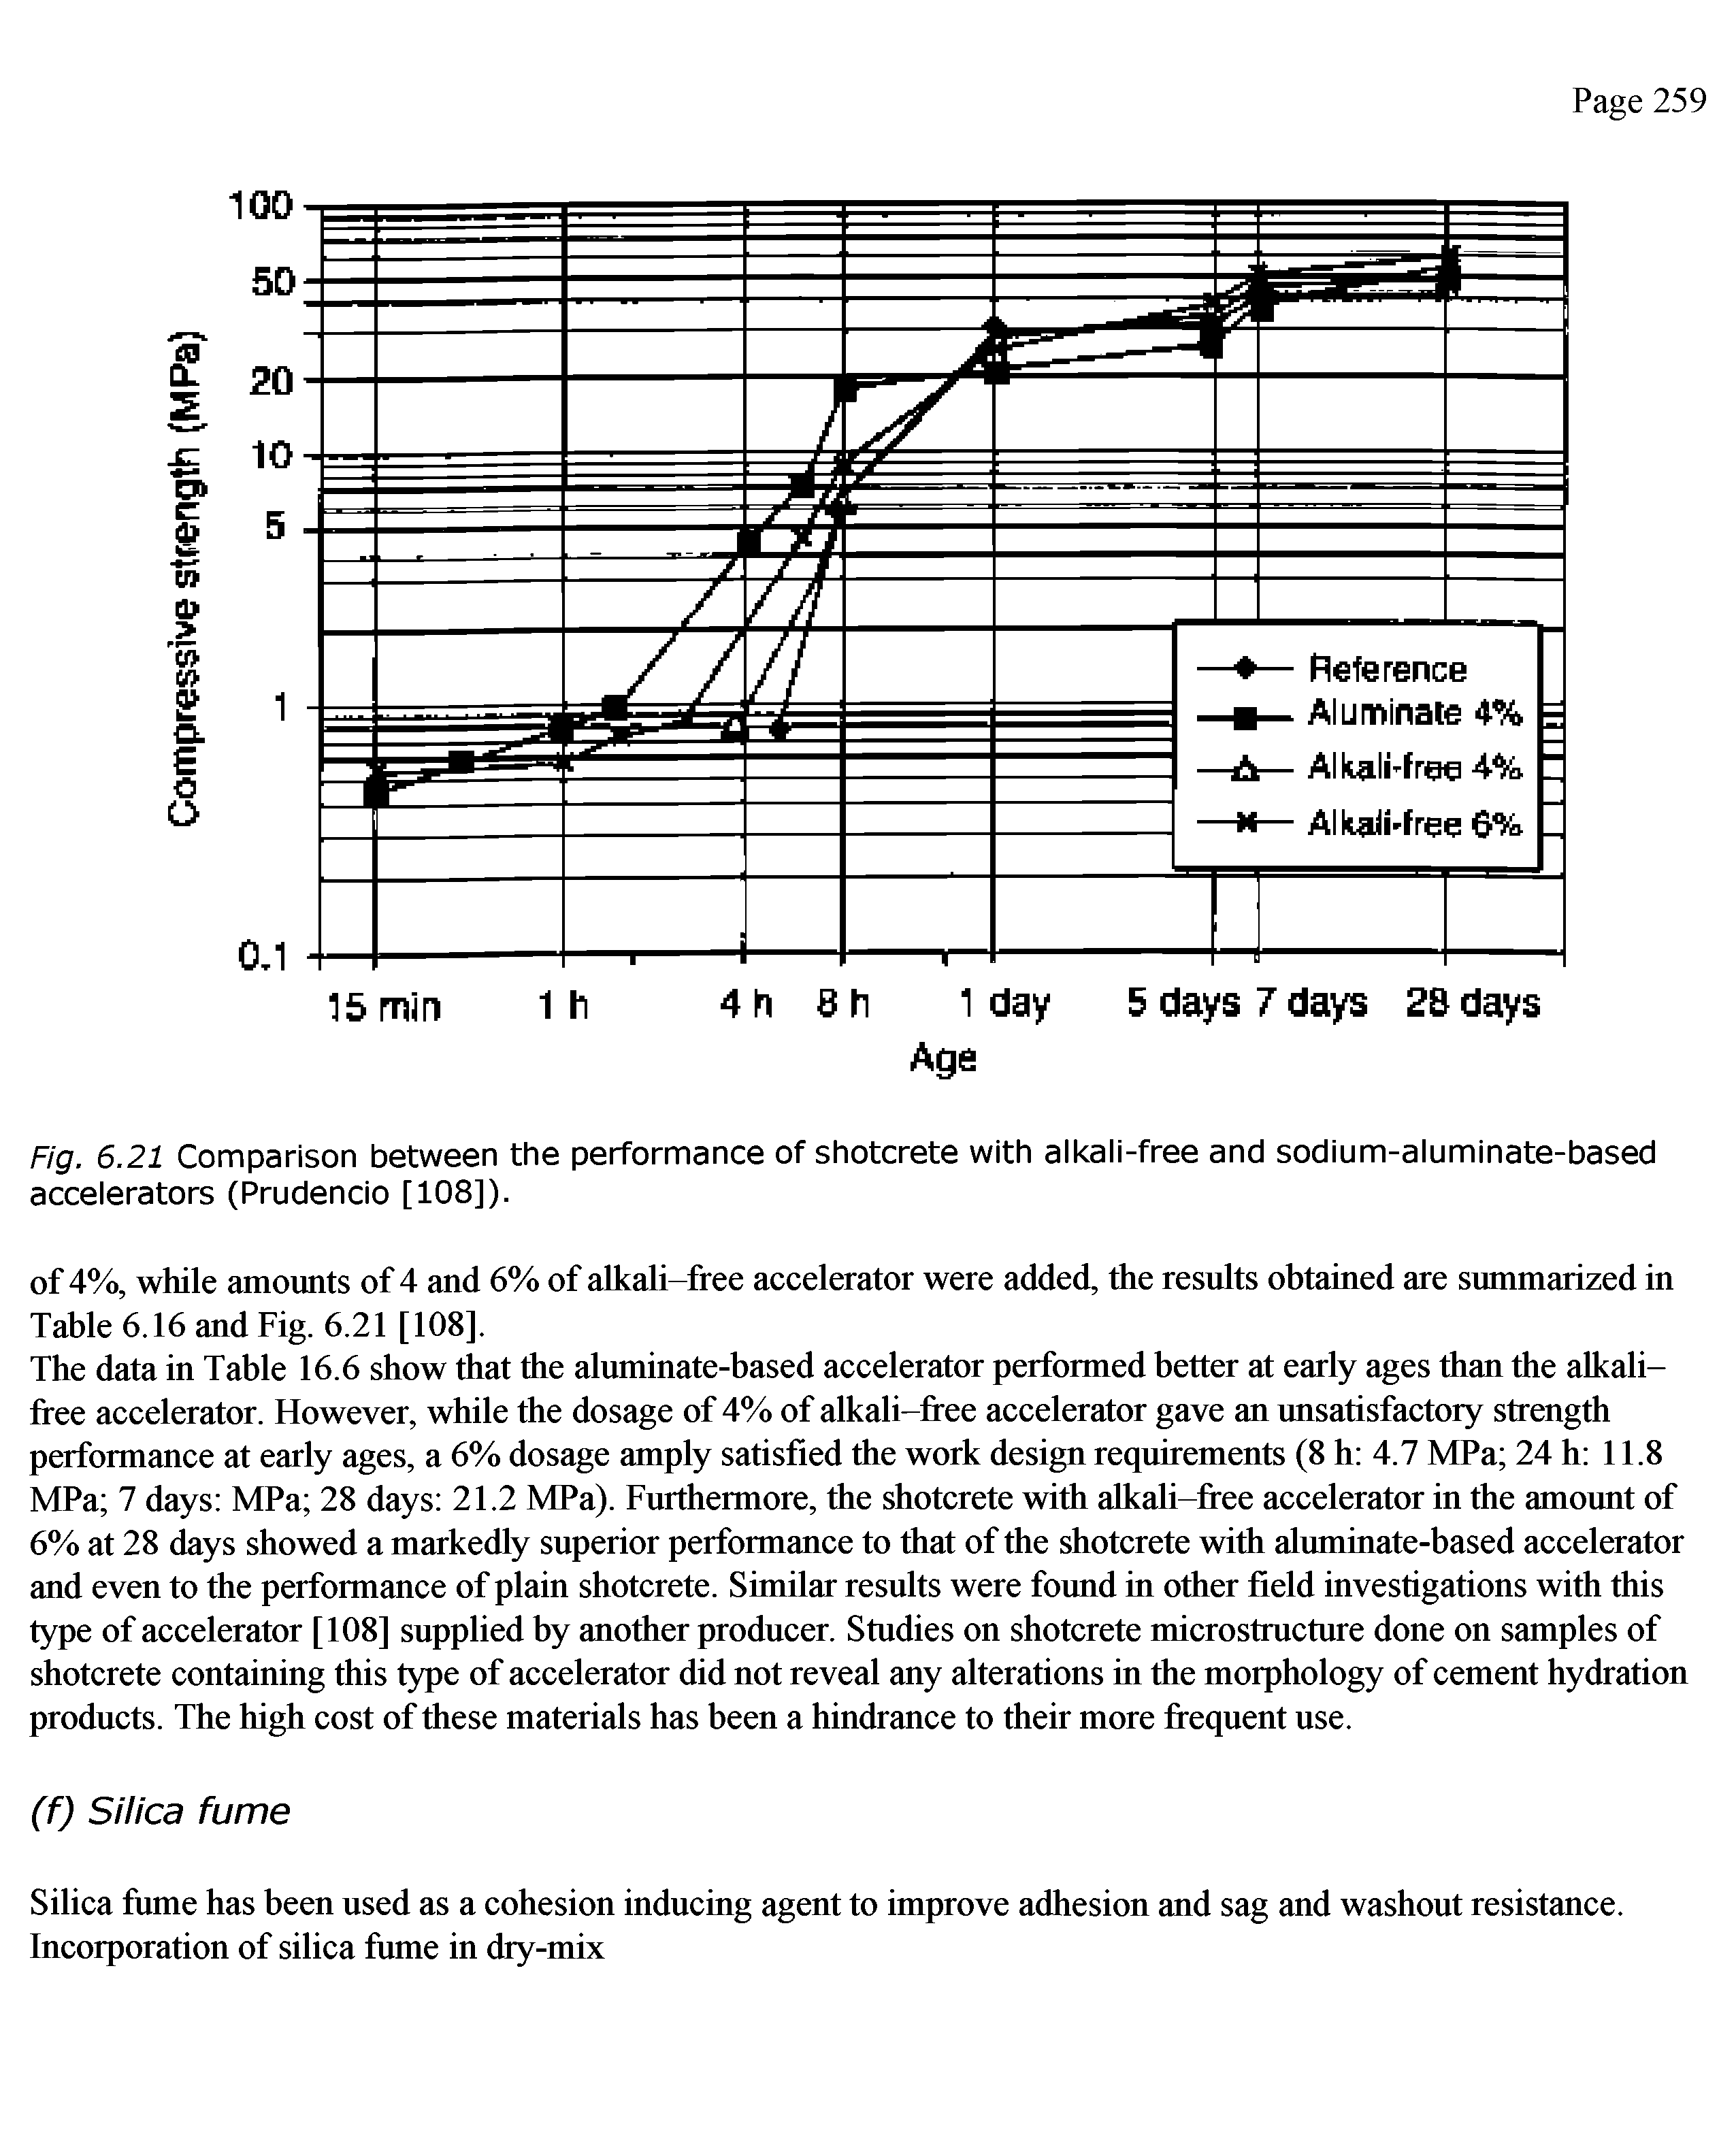 Fig. 6.21 Comparison between the performance of shotcrete with alkali-free and sodium-aluminate-based accelerators (Prudencio [108]).